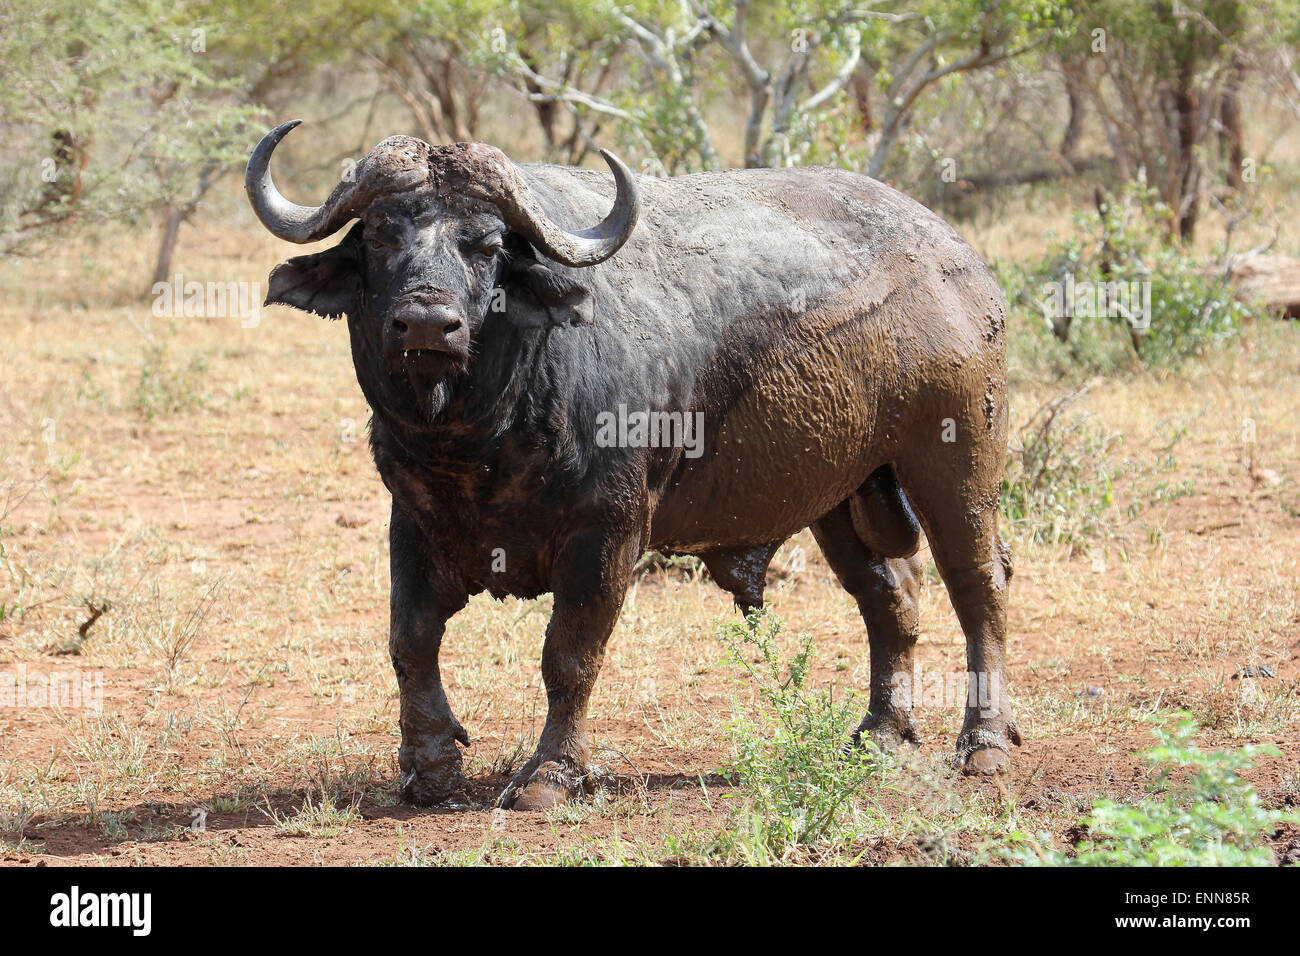 Buffalo Bull after enjoying a mud bath Stock Photo